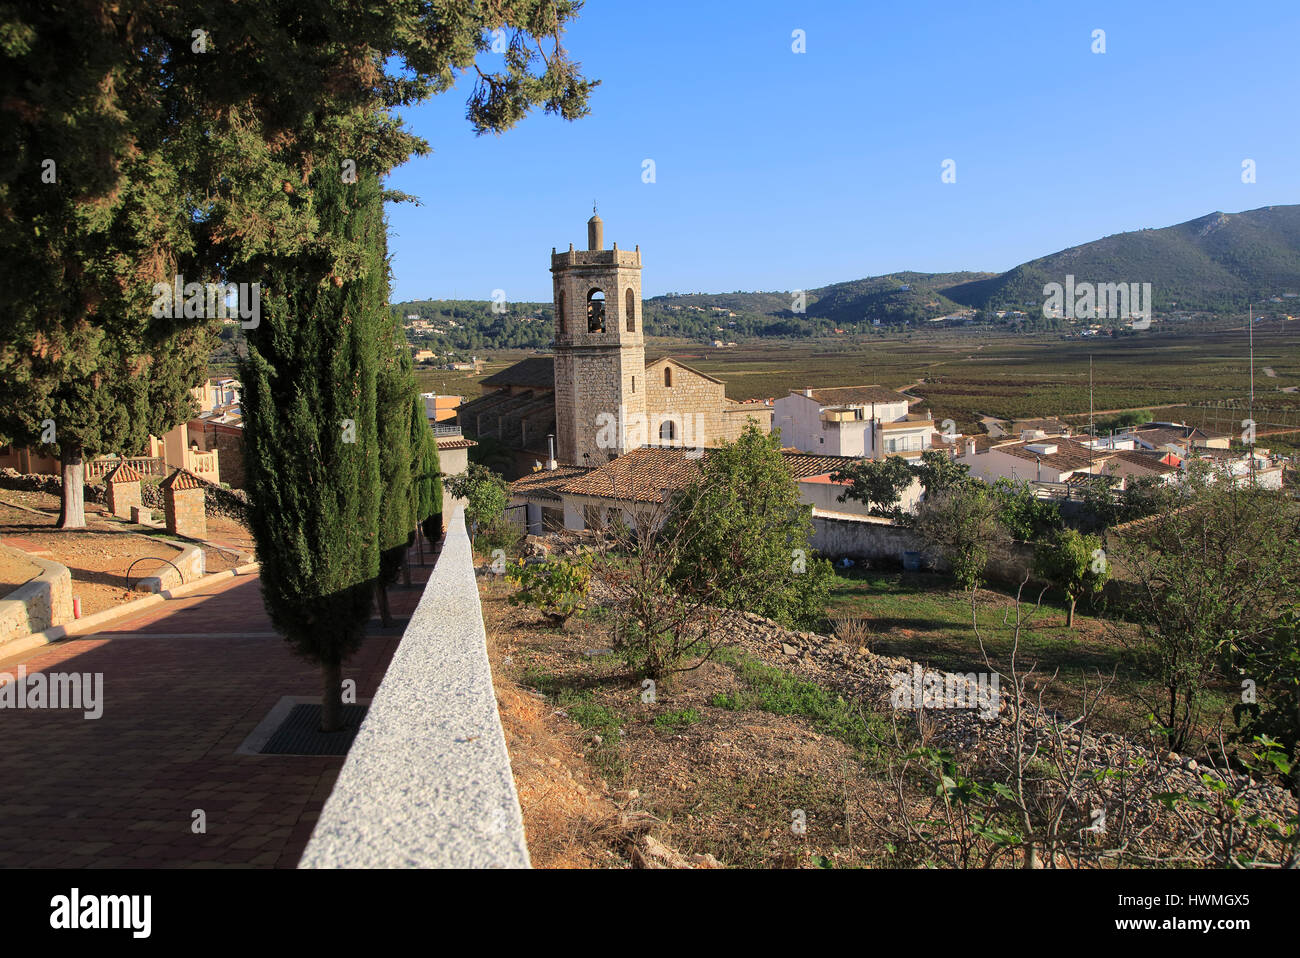 Church tower and village rooftops, Lliber, Marina Alta, Alicante province, Spain Stock Photo